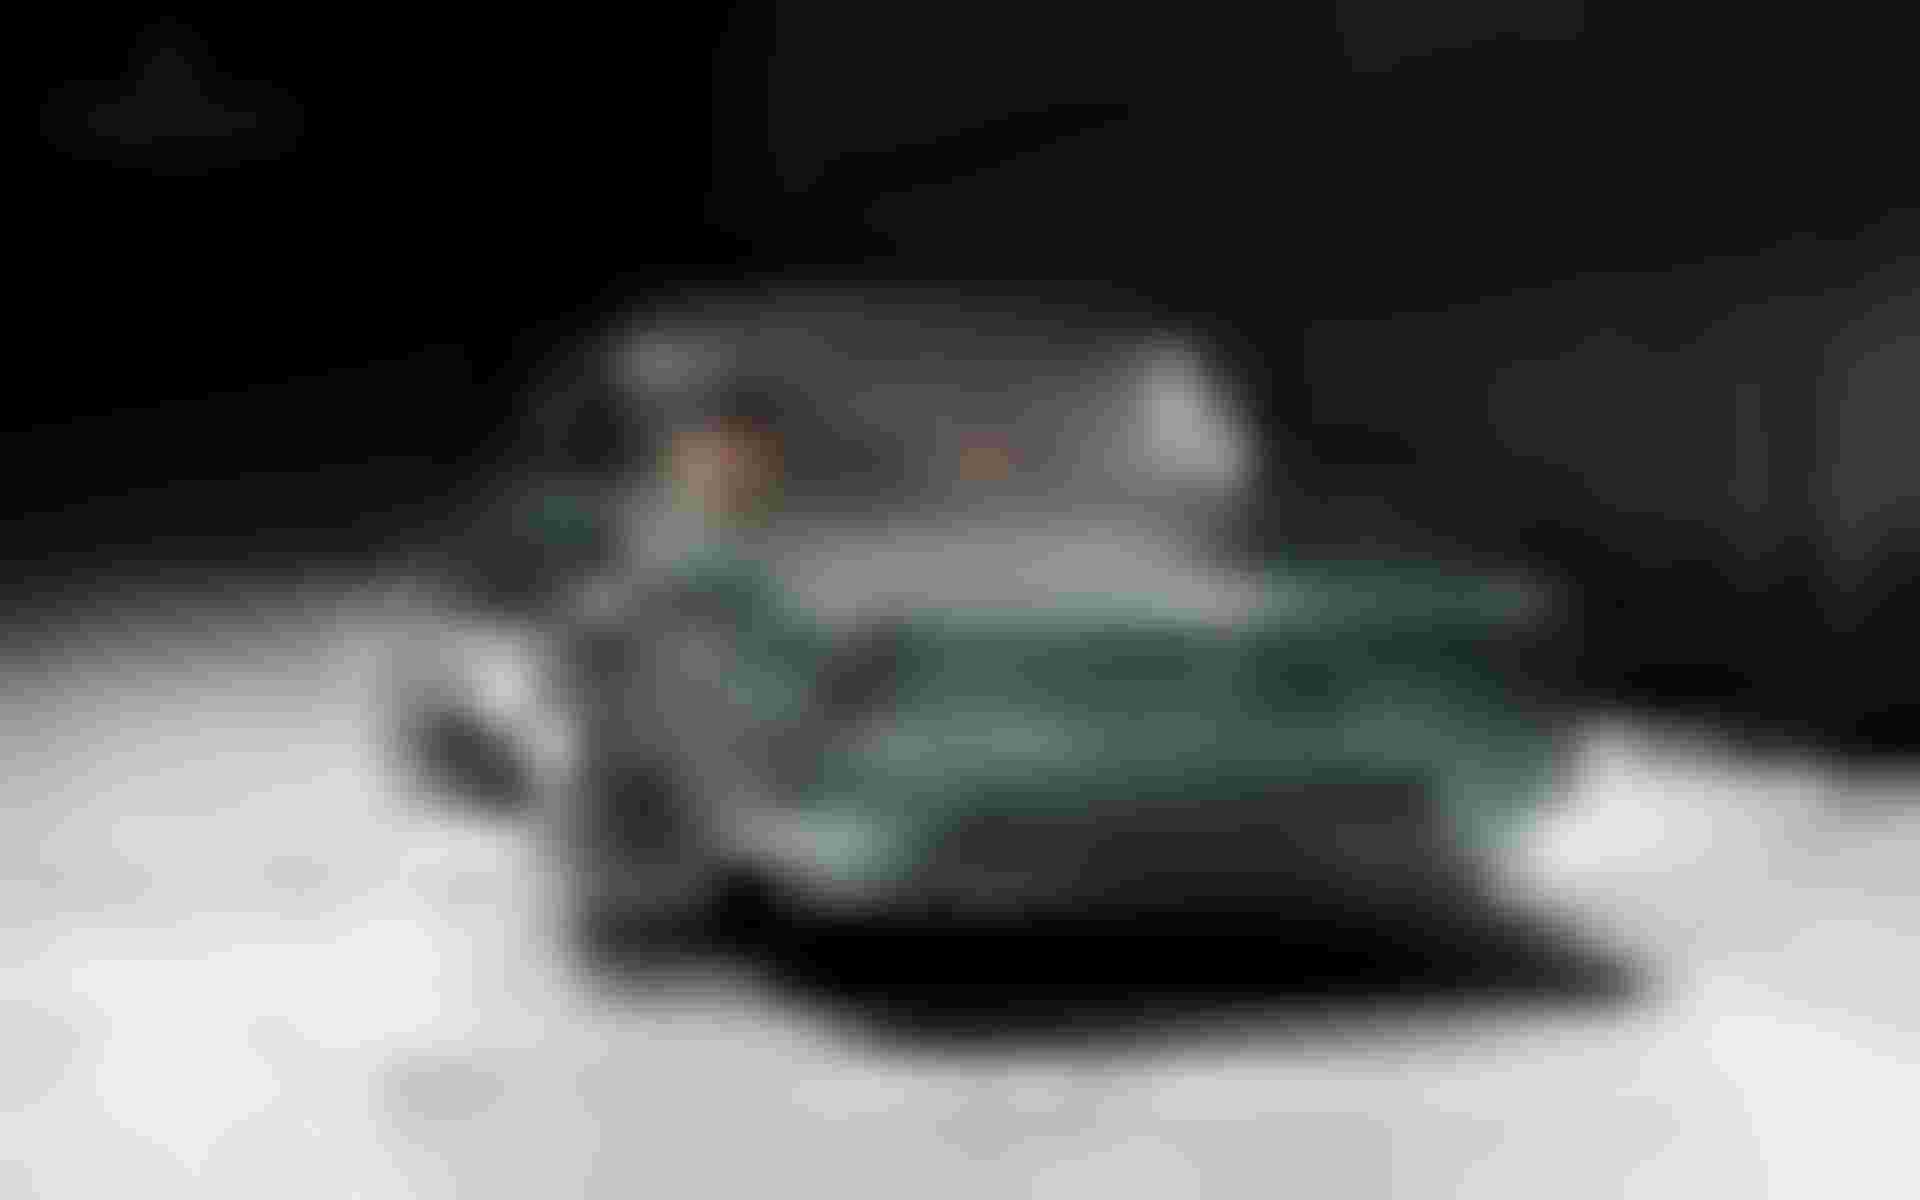 xe co jaguar xj coupe bien hinh theo phong cach than rong